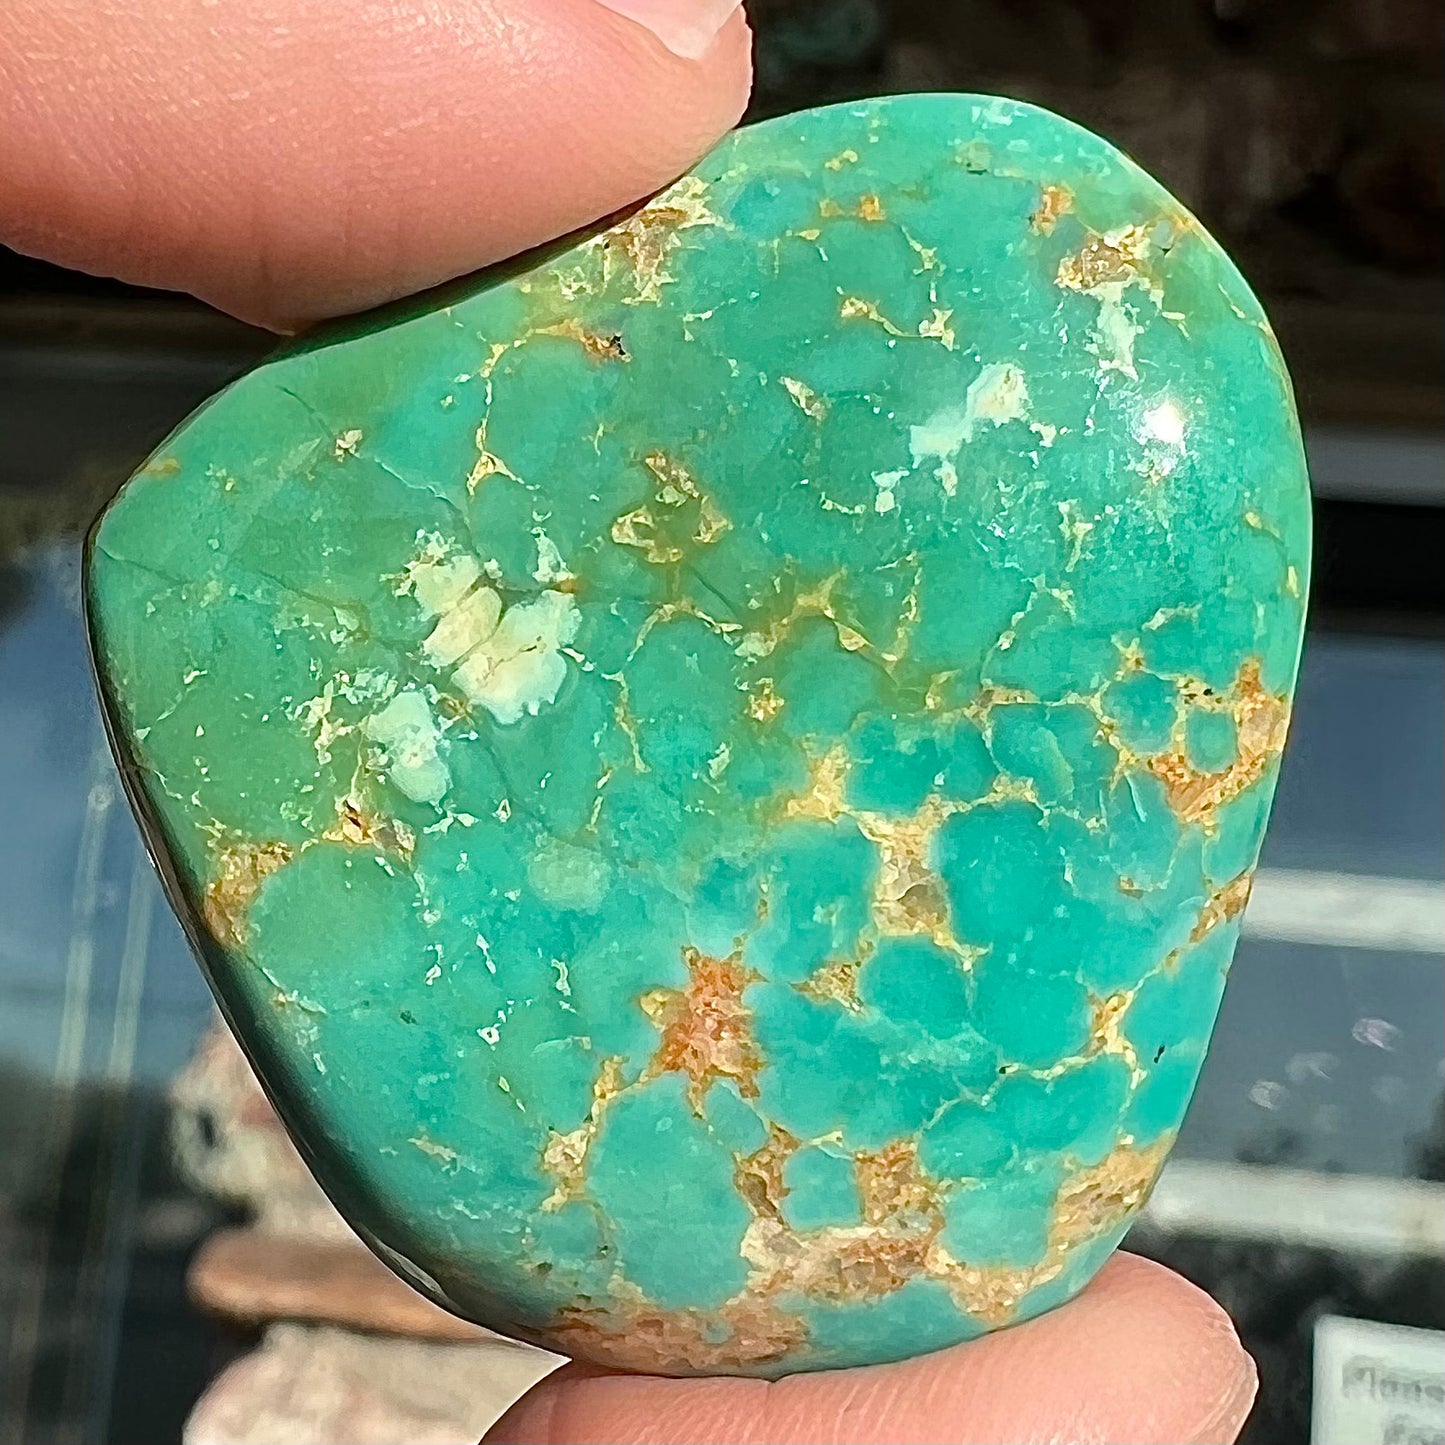 A loose polished greenish blue turquoise stone from Manassa, Colorado.